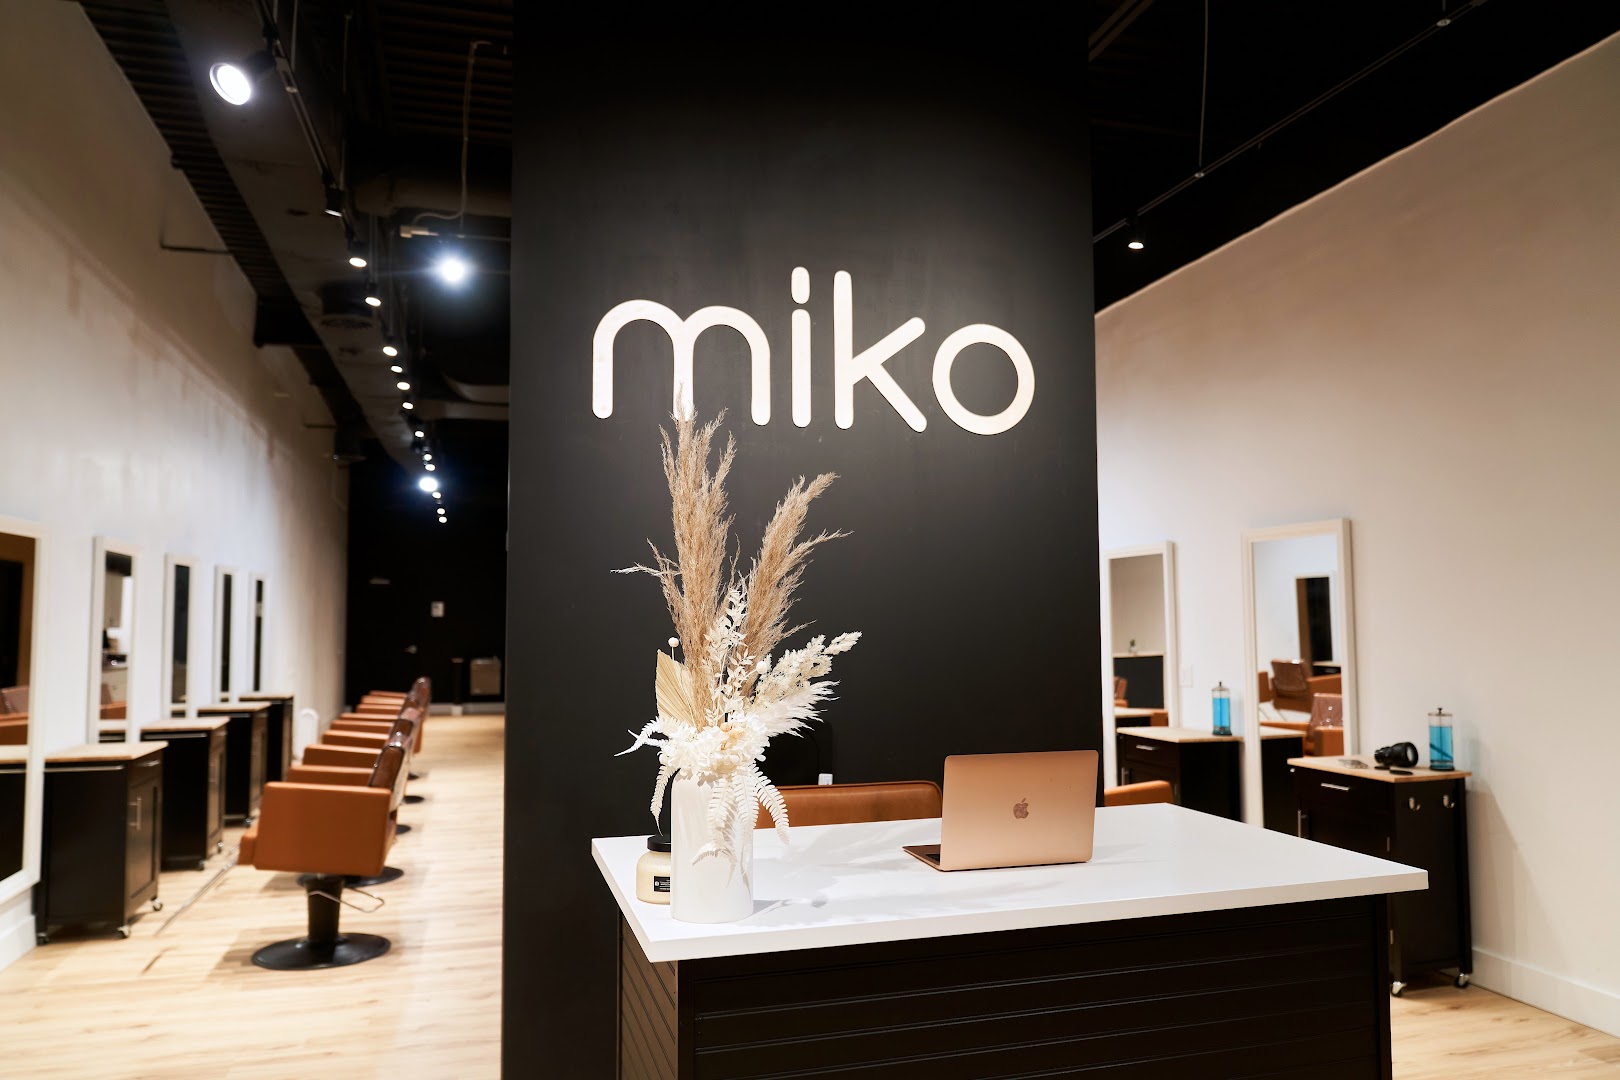 Miko Studios